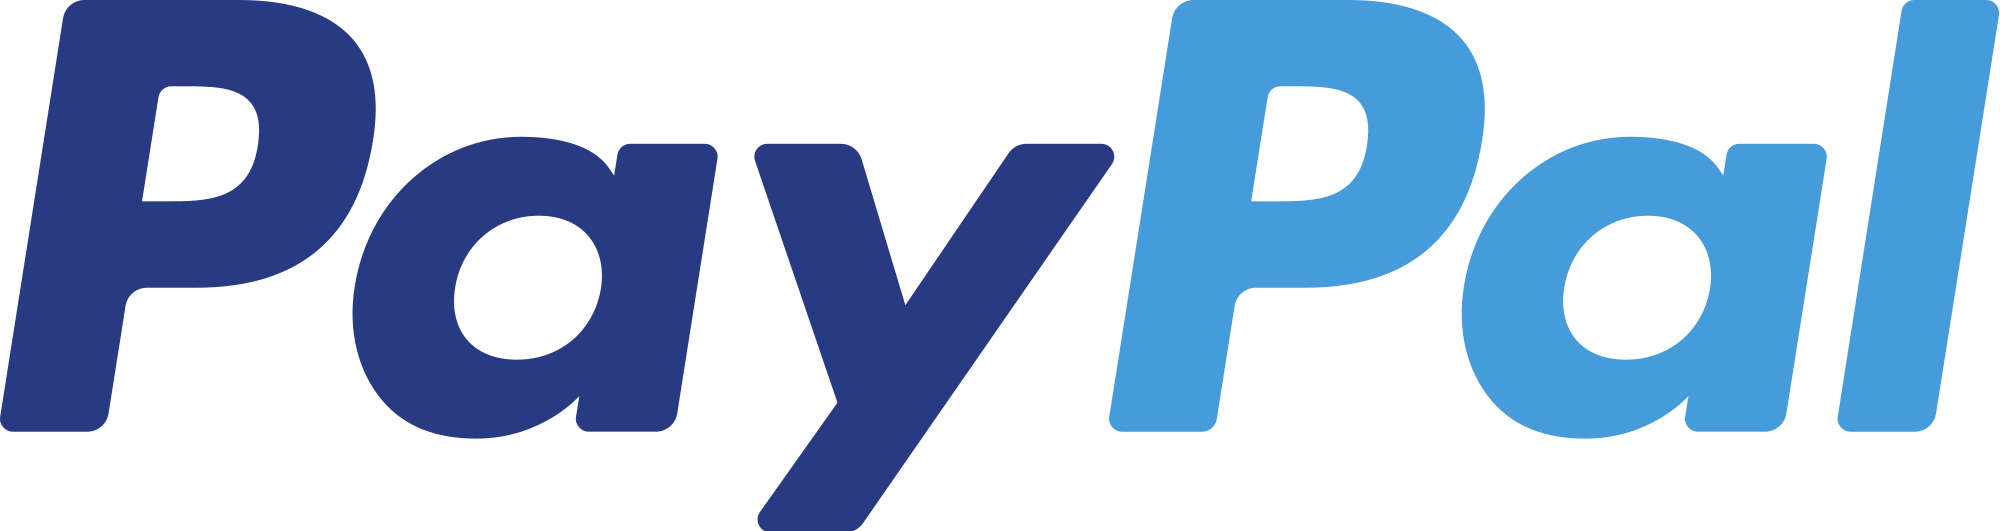 Paypal logo clipart - circlejulu